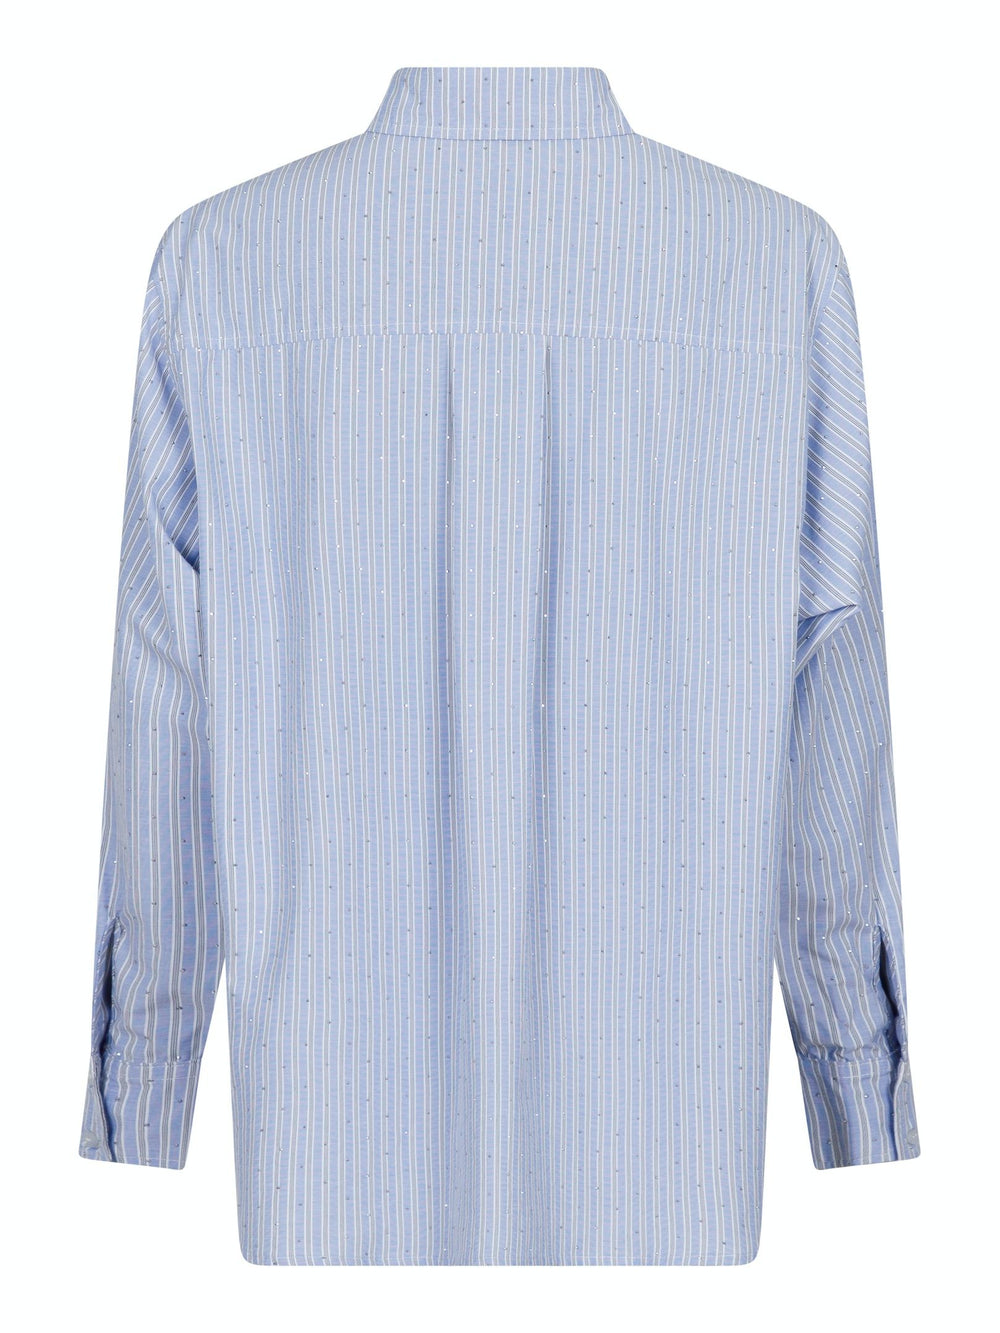 Neo Noir Skjorte - Dalma Stripe Stone Skjorte i Blå